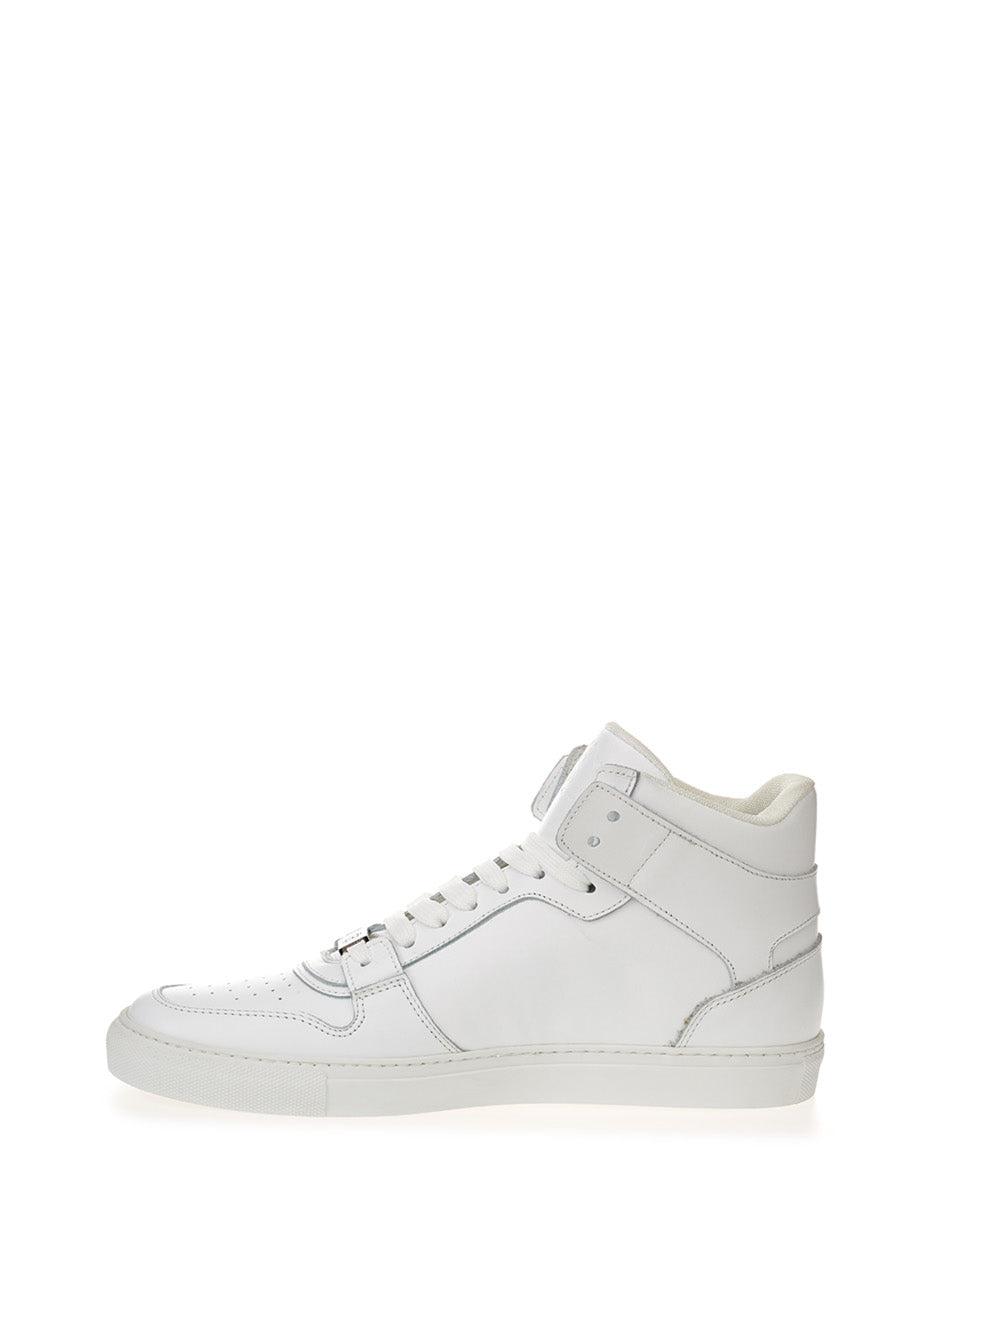 Roberto Cavalli White Leather High Sneakers